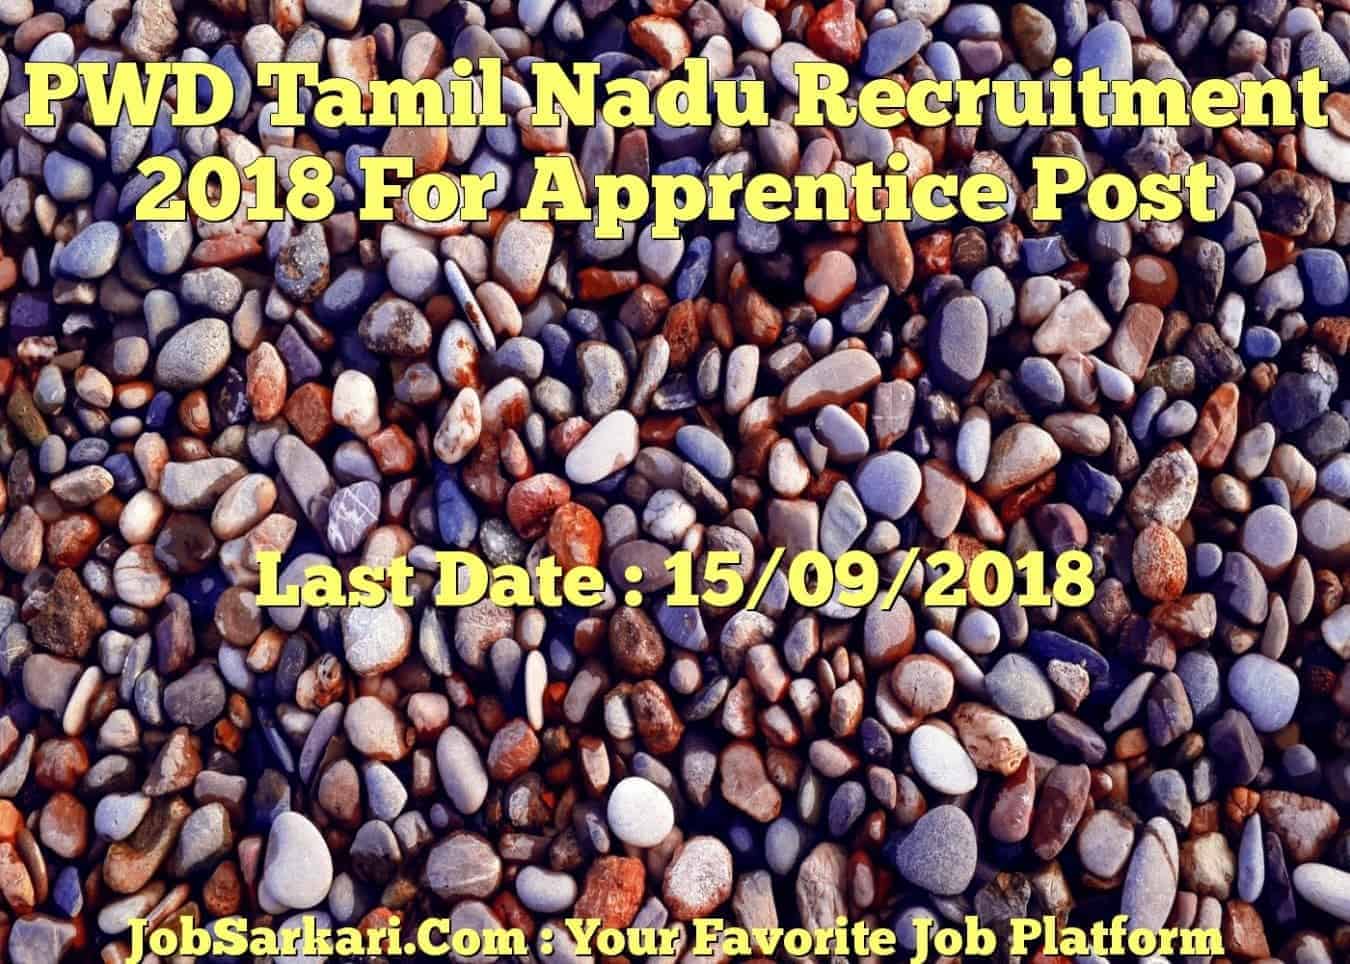 PWD Tamil Nadu Recruitment 2018 For Apprentice Post